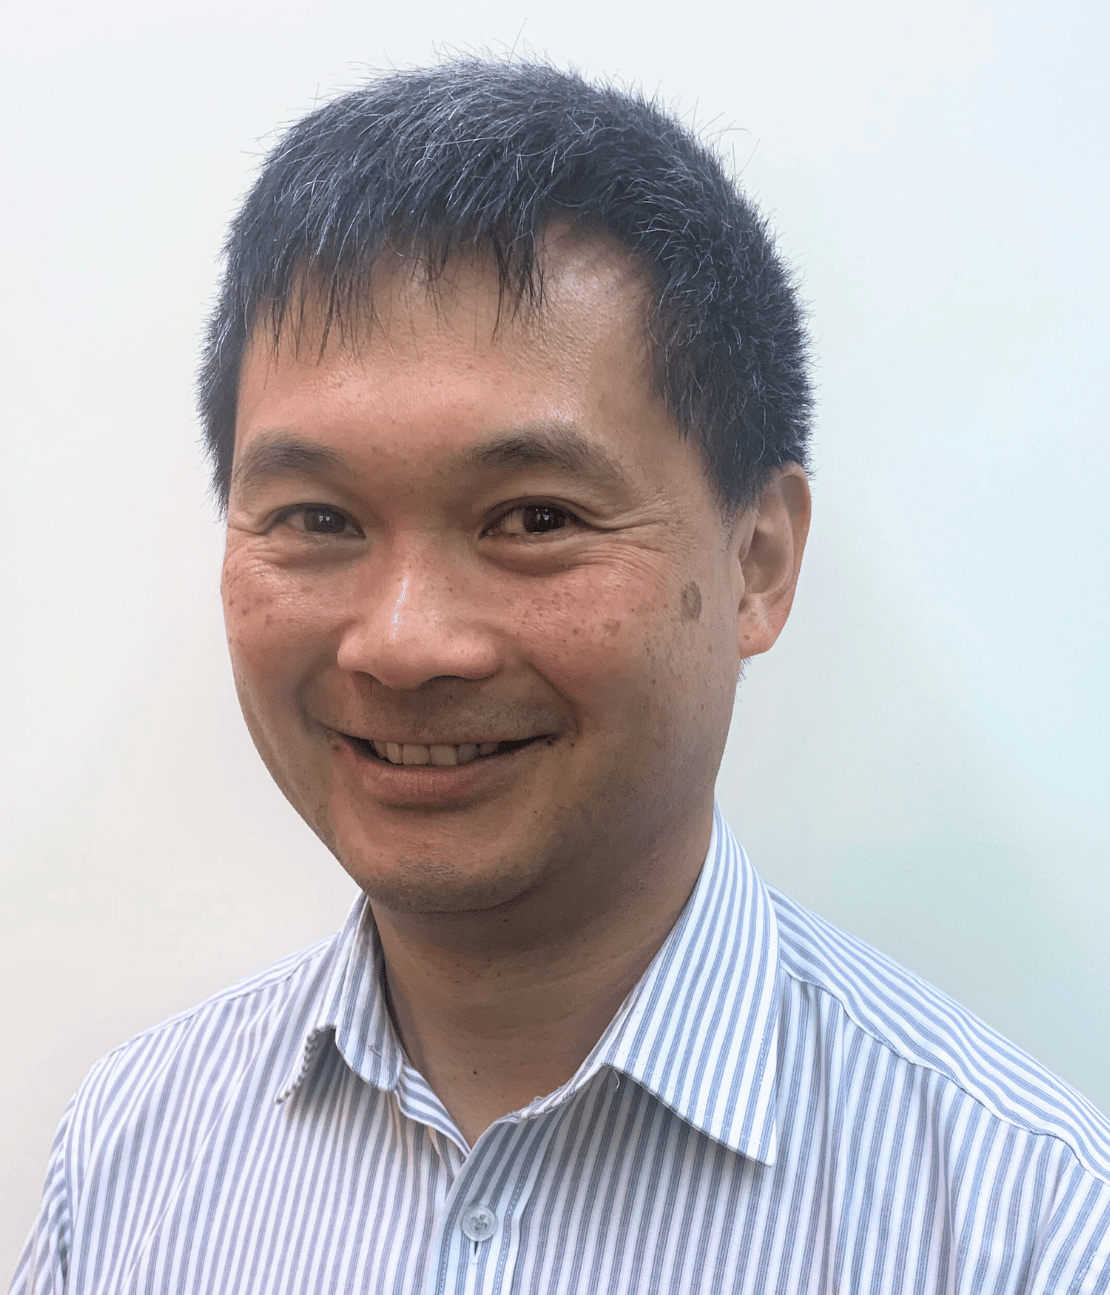 Assistant Professor Vincent Wong